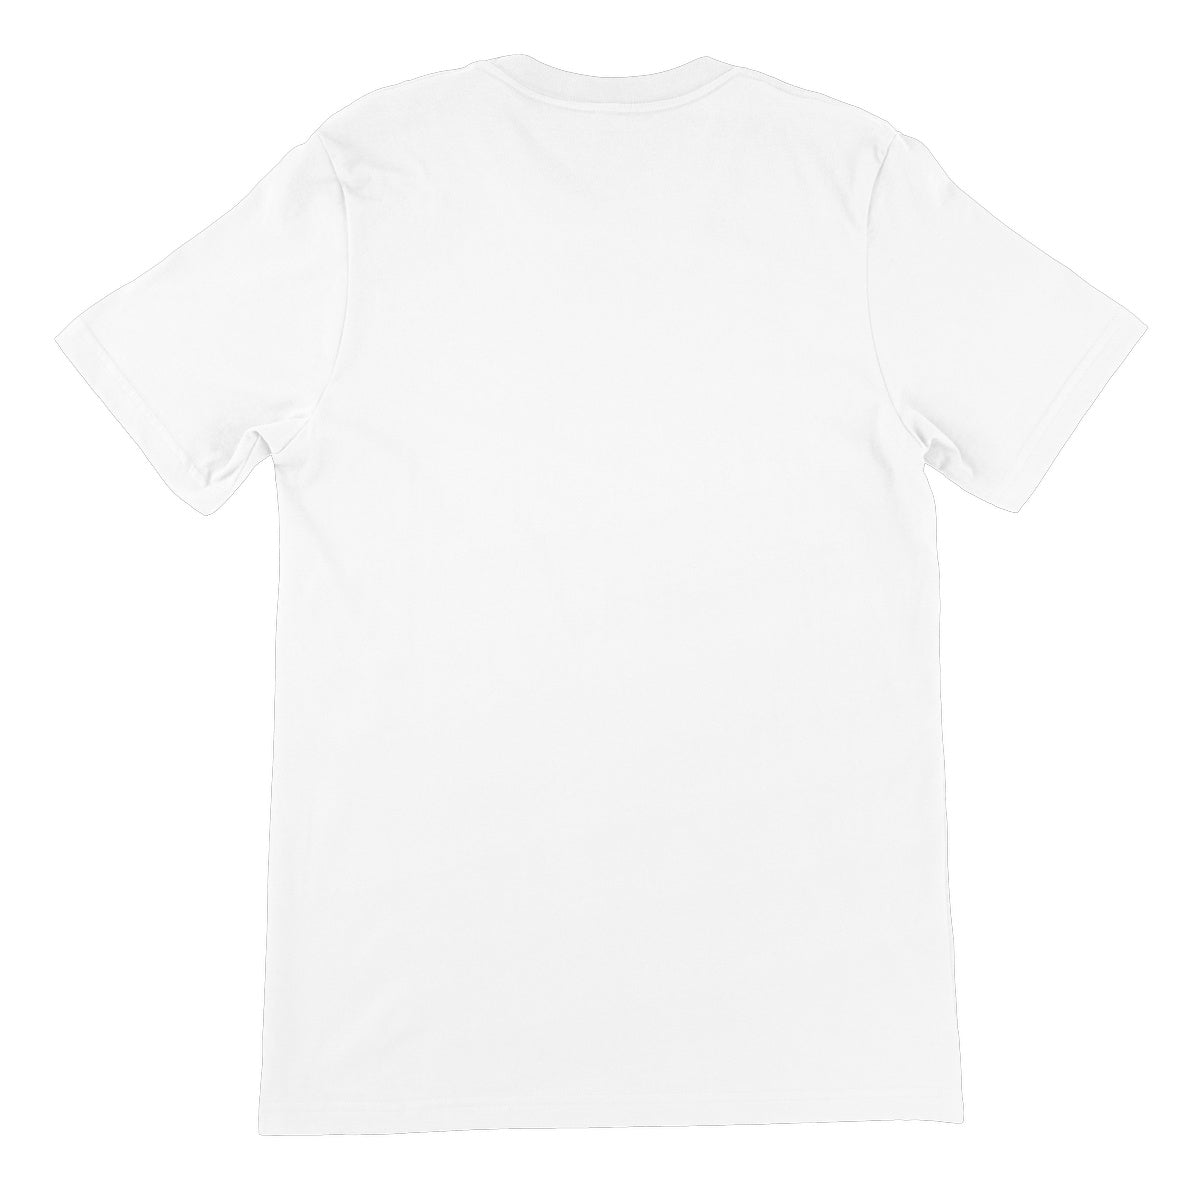 CxE Fly Unisex Short Sleeve T-Shirt